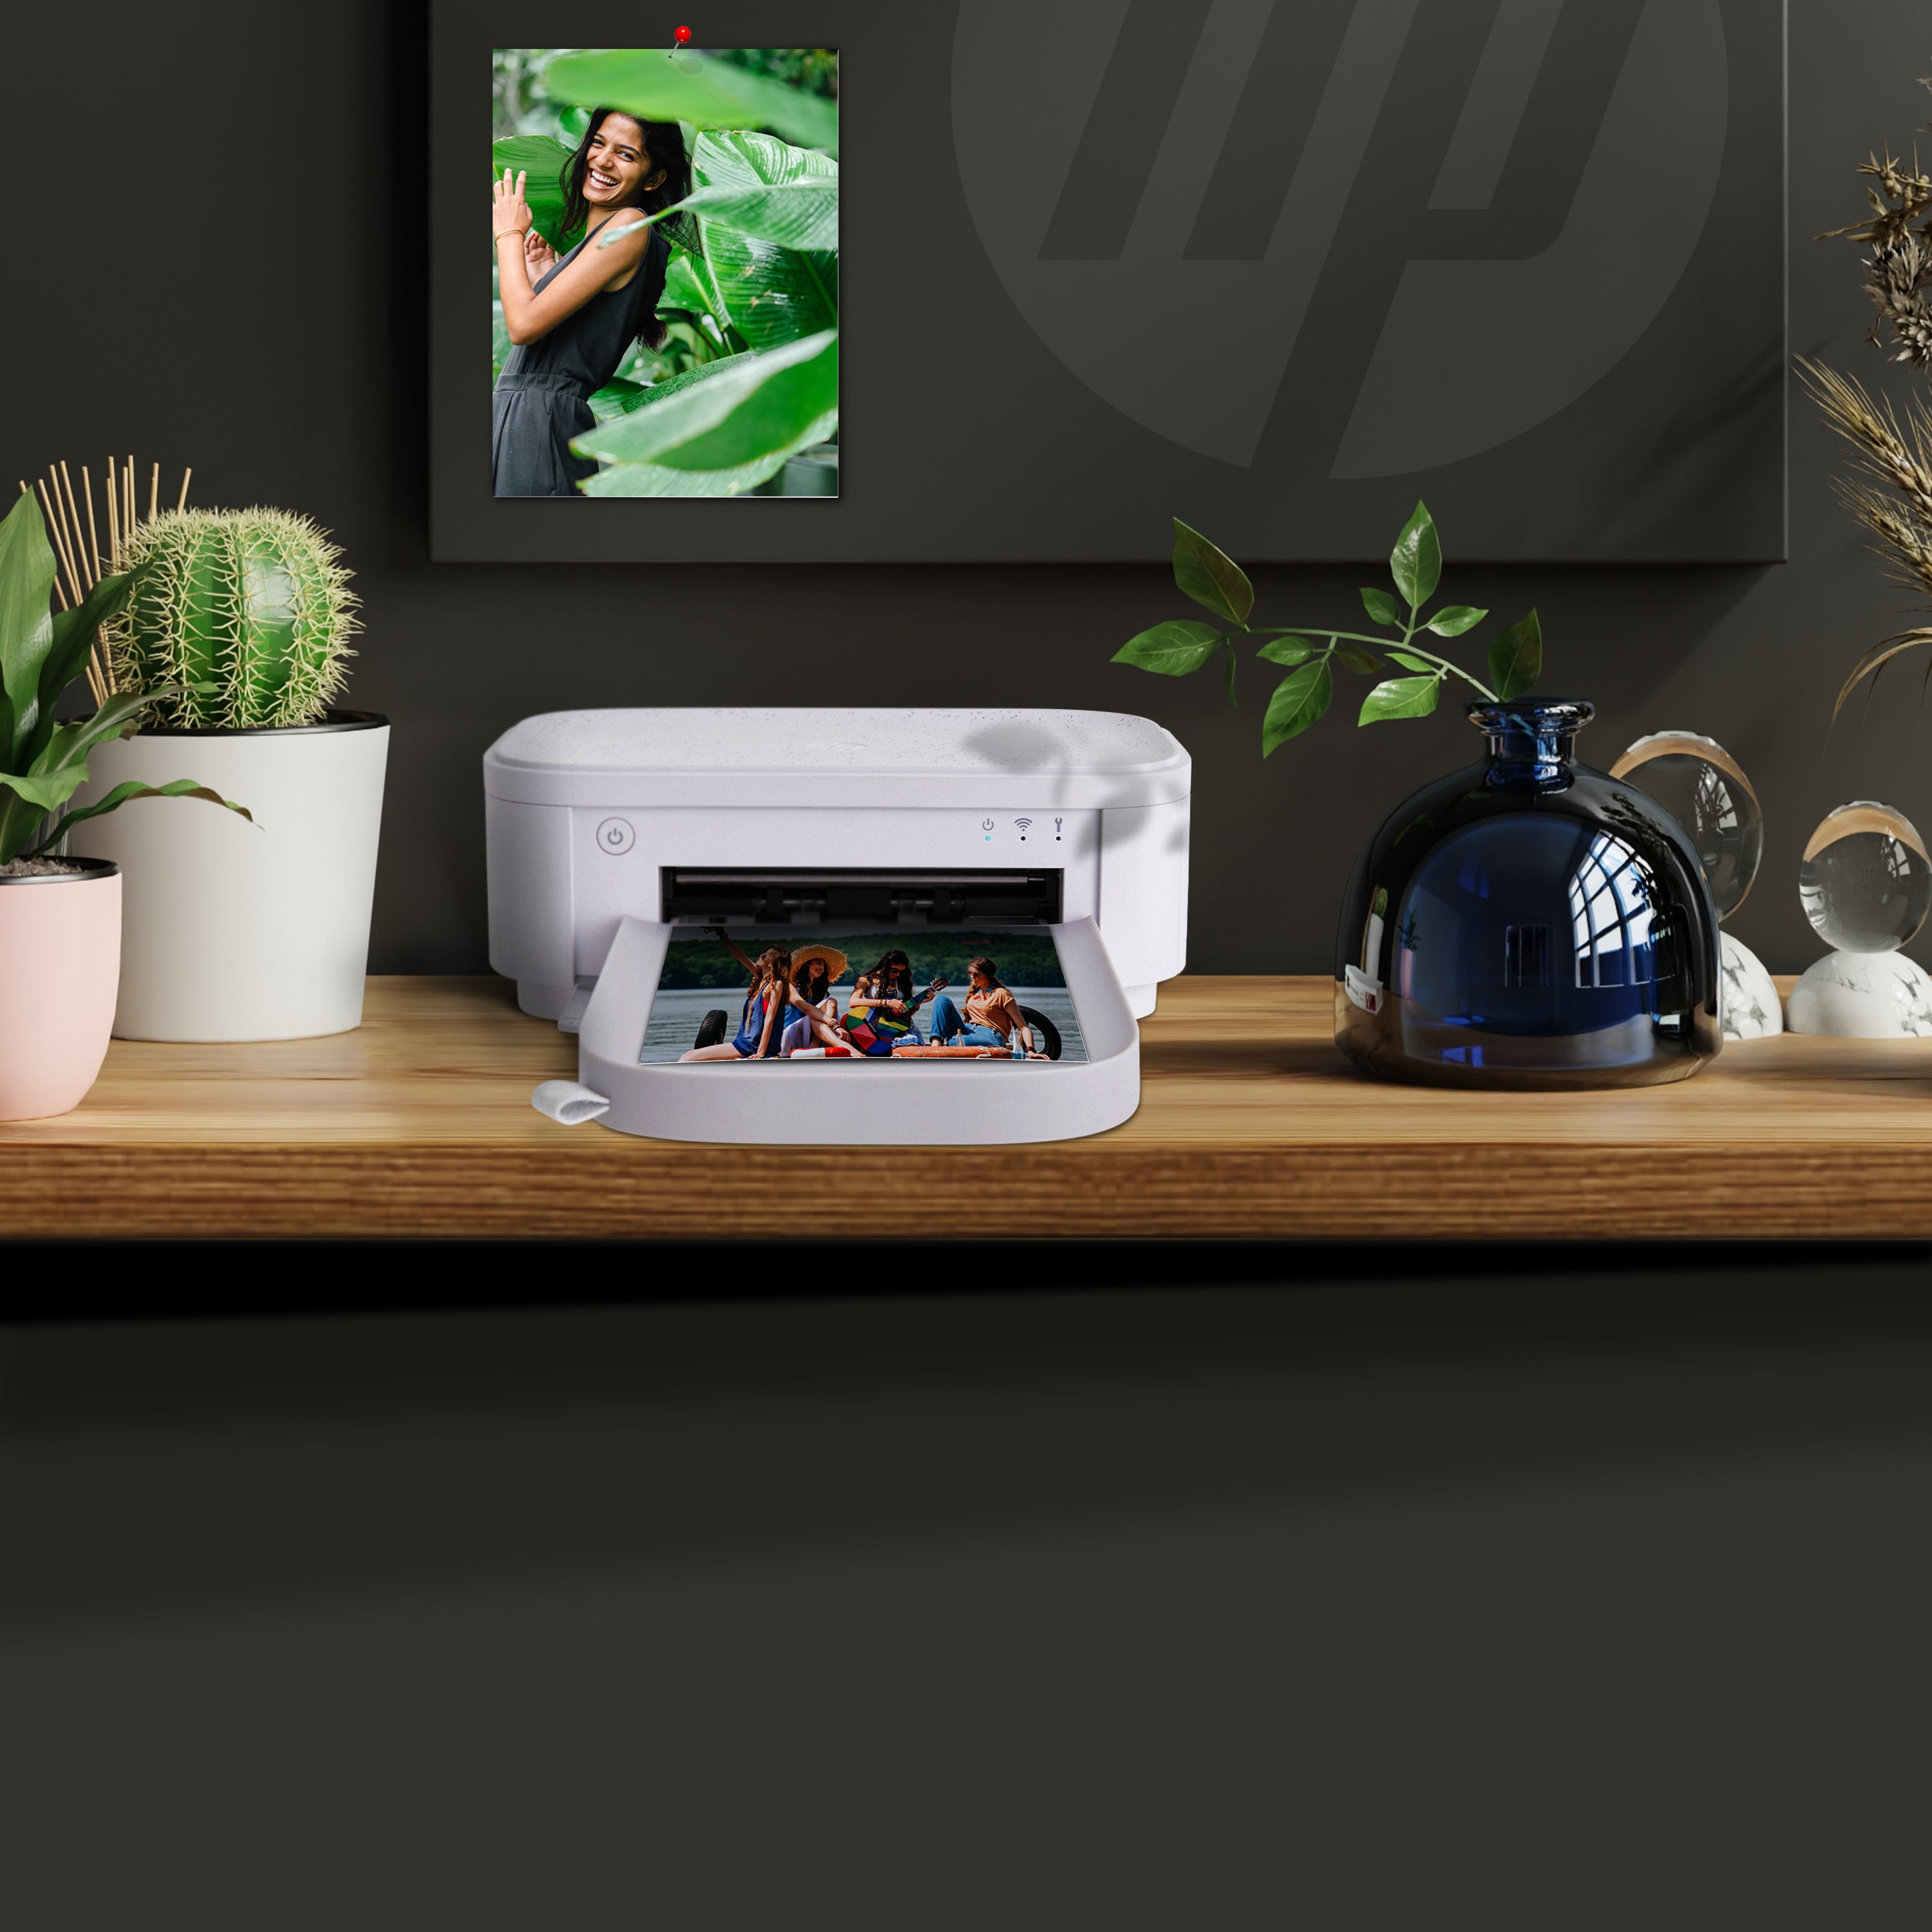 HP Sprocket Studio photo printer review